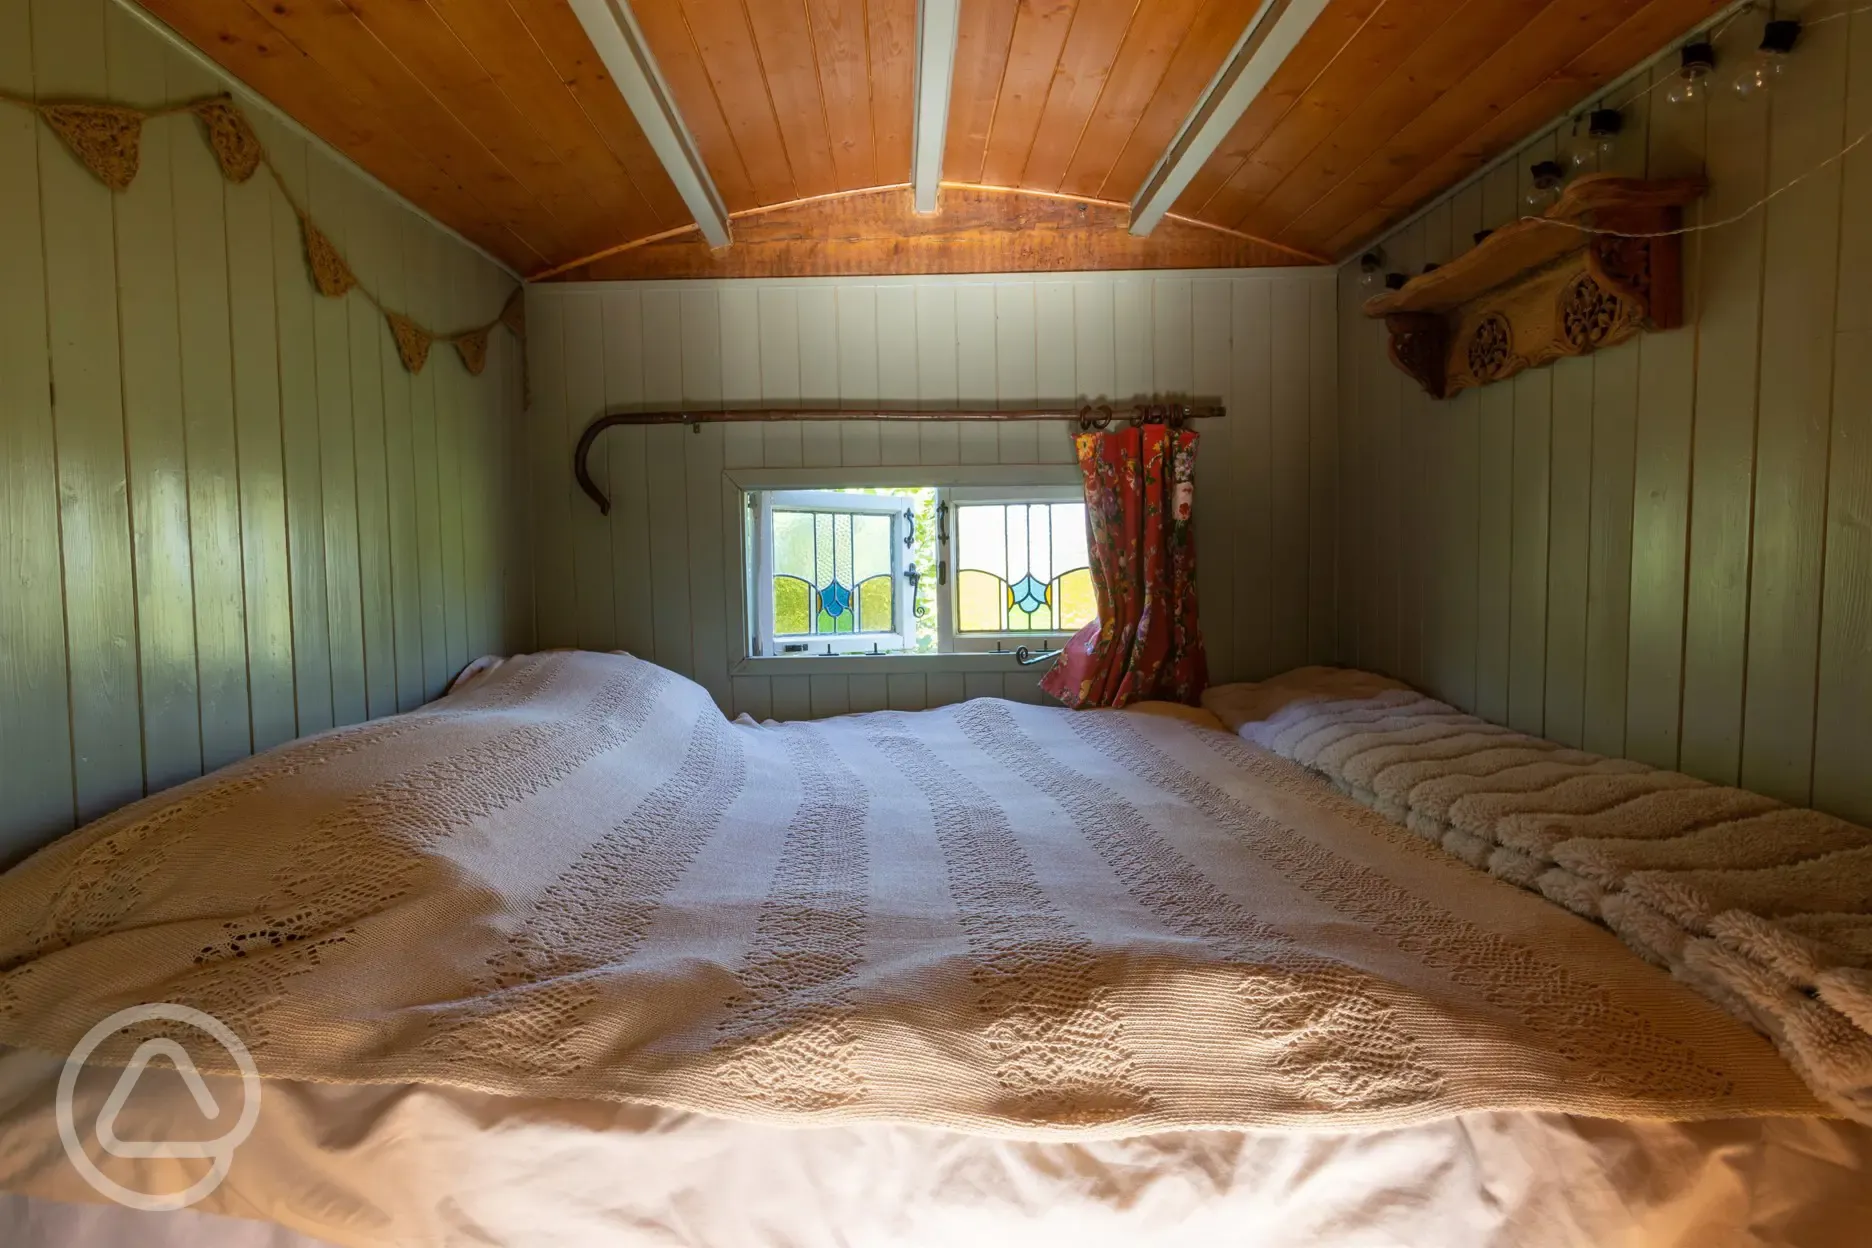 Shepherds hut bed